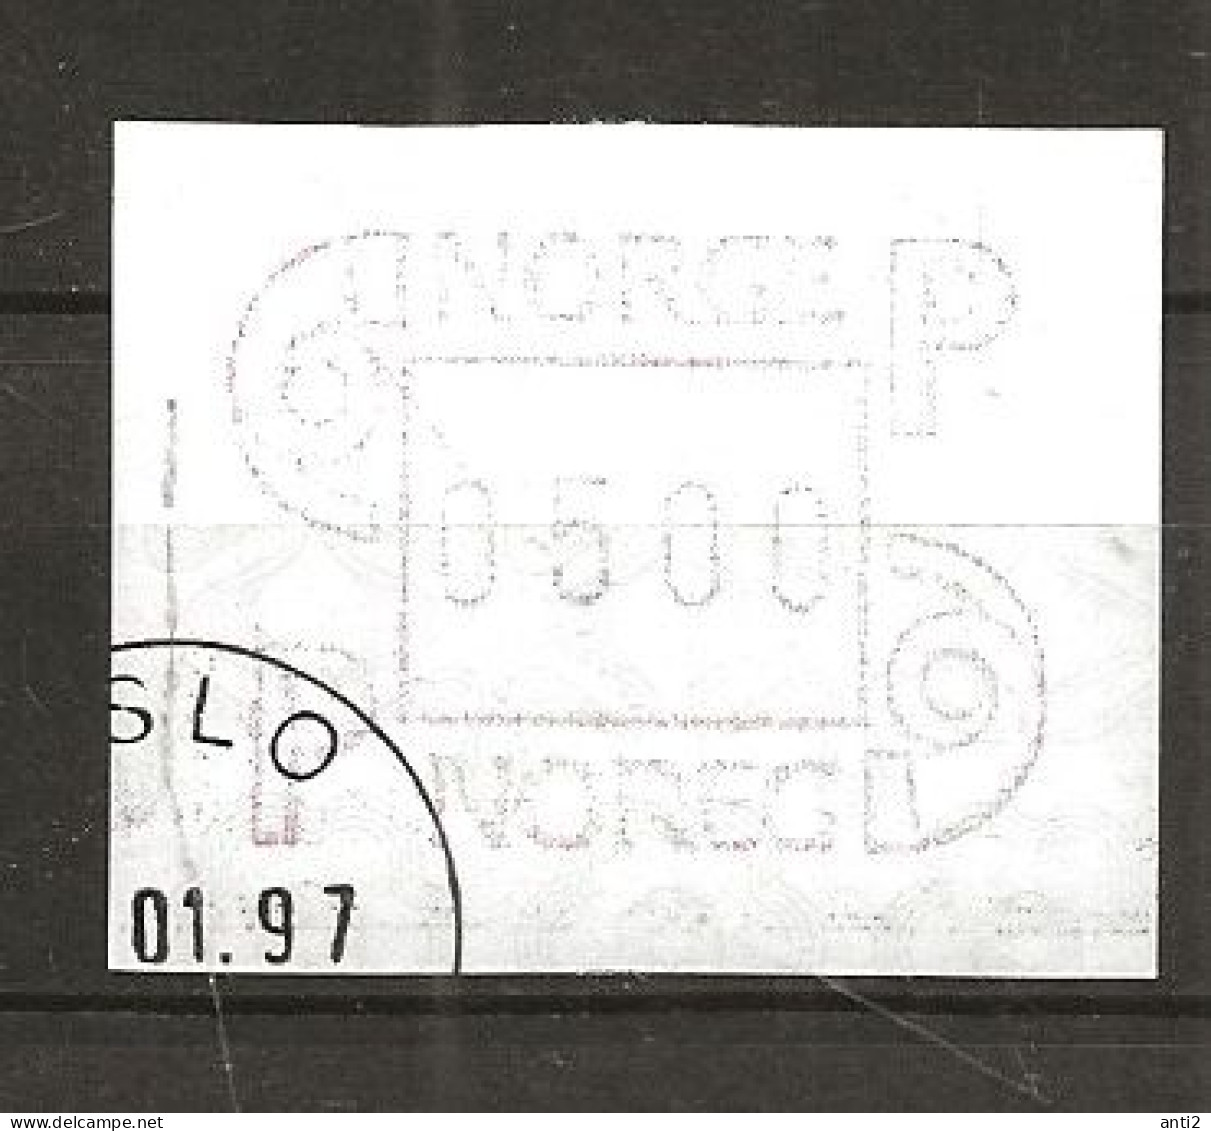 Norway 1997 ATM - Machine Label  NOK 5.00 - Vendel Machine Stamp Mi 3   - Cancelledn January 97 - Machine Labels [ATM]